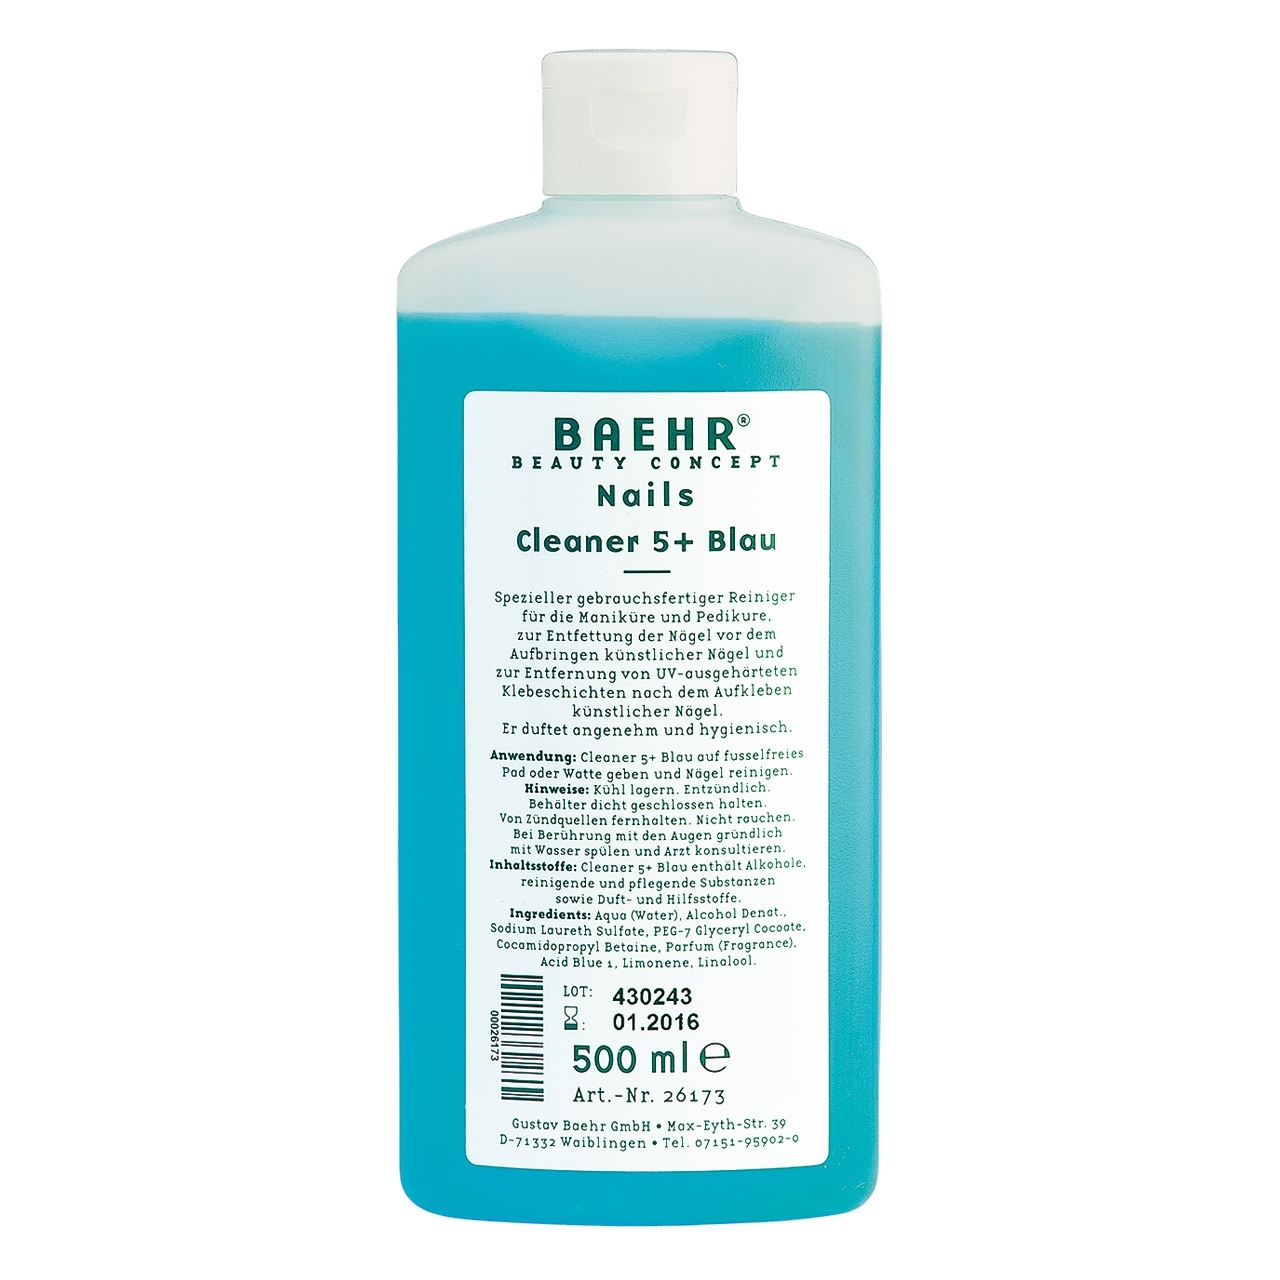 BAEHR BEAUTY CONCEPT Cleaner 5+, blau 500 ml (Staffelpreis)